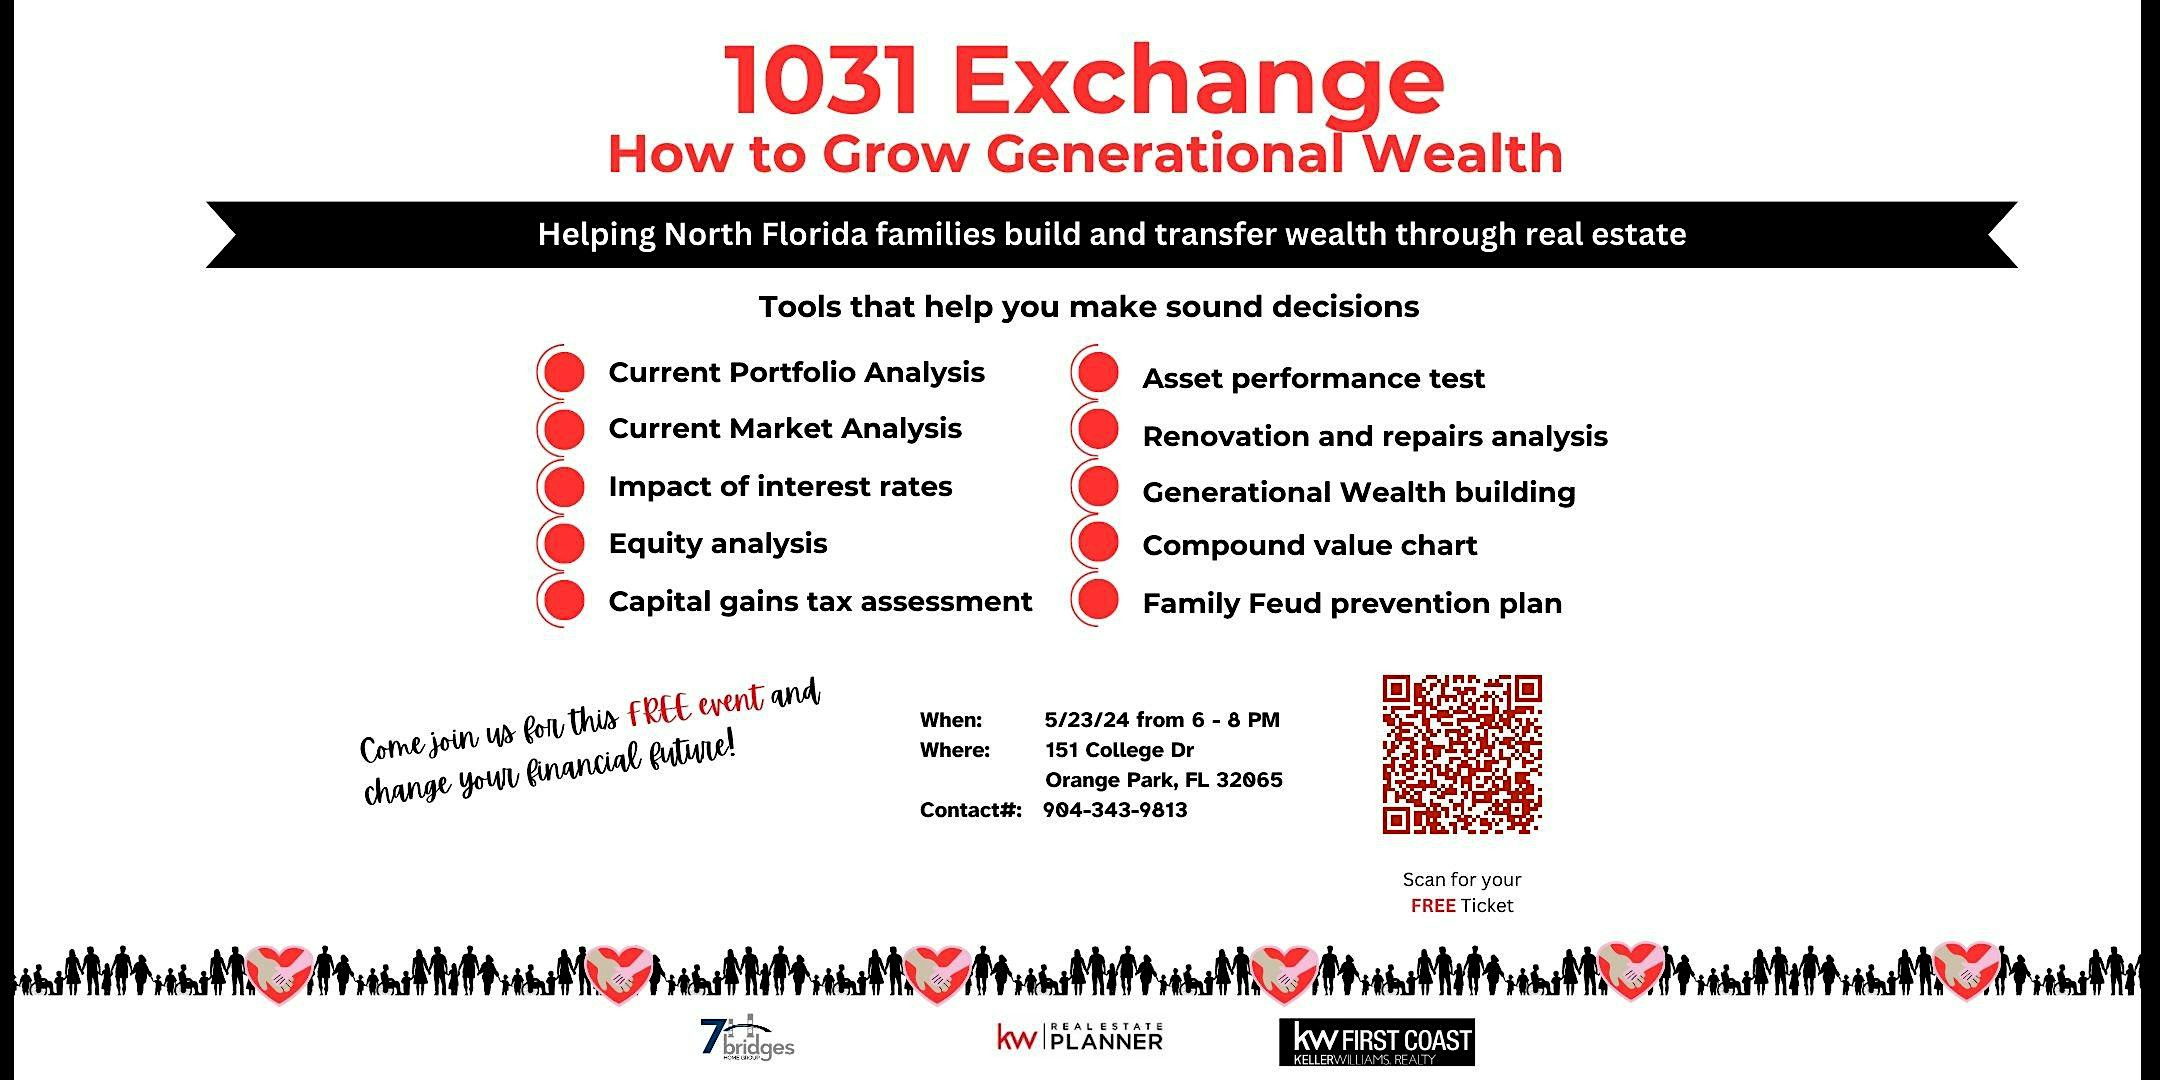 1031 Exchange - How to Grow Generational Wealth